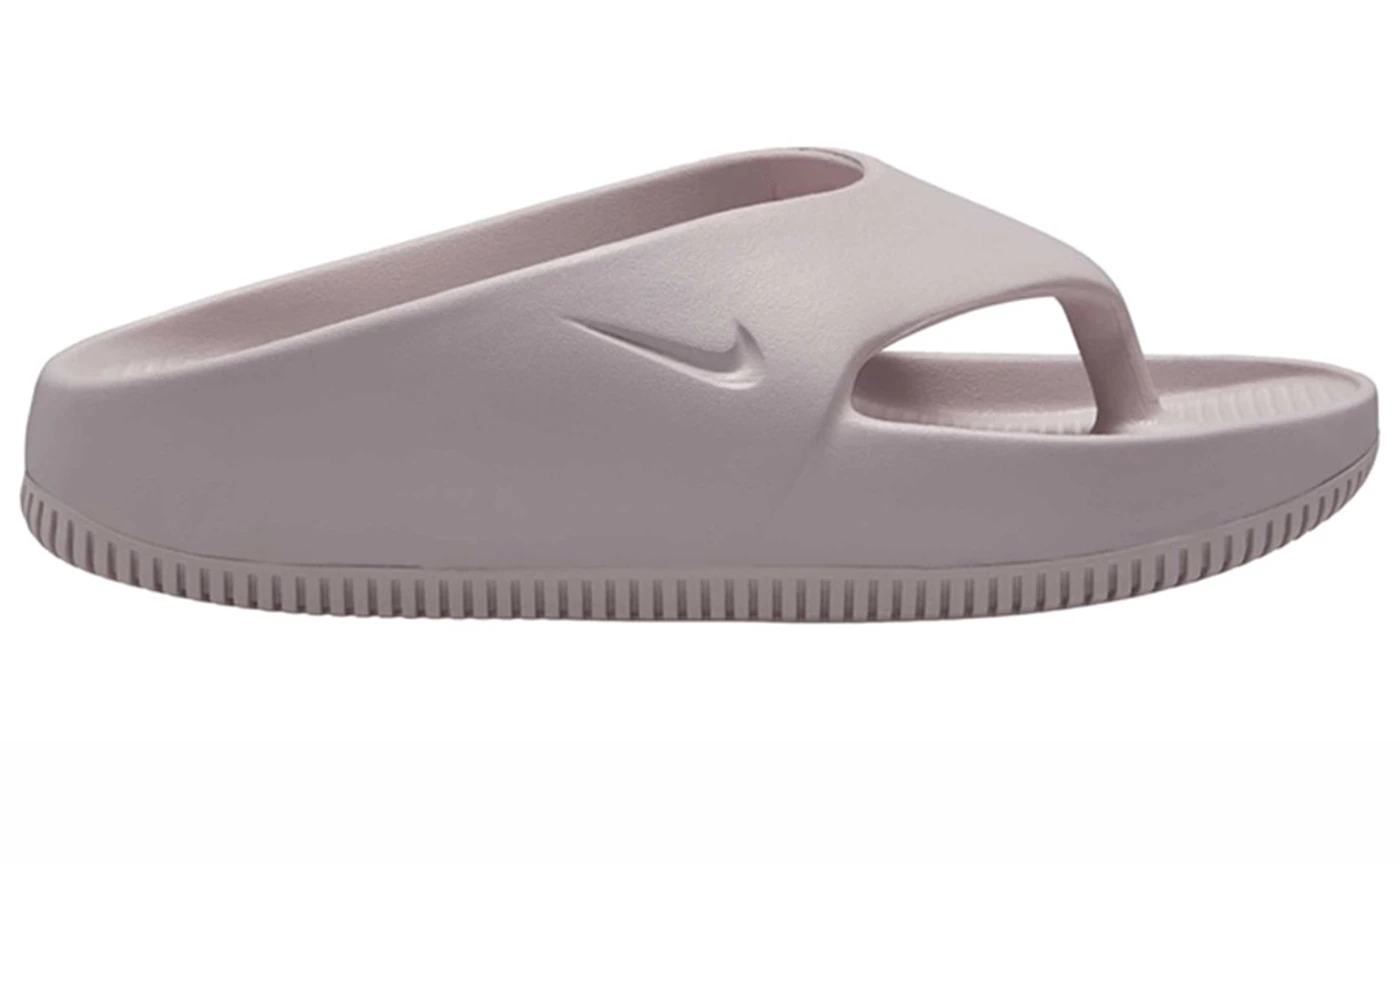 Nike Calm Flip Flop Pink (Women's) - FD4115-002 - US